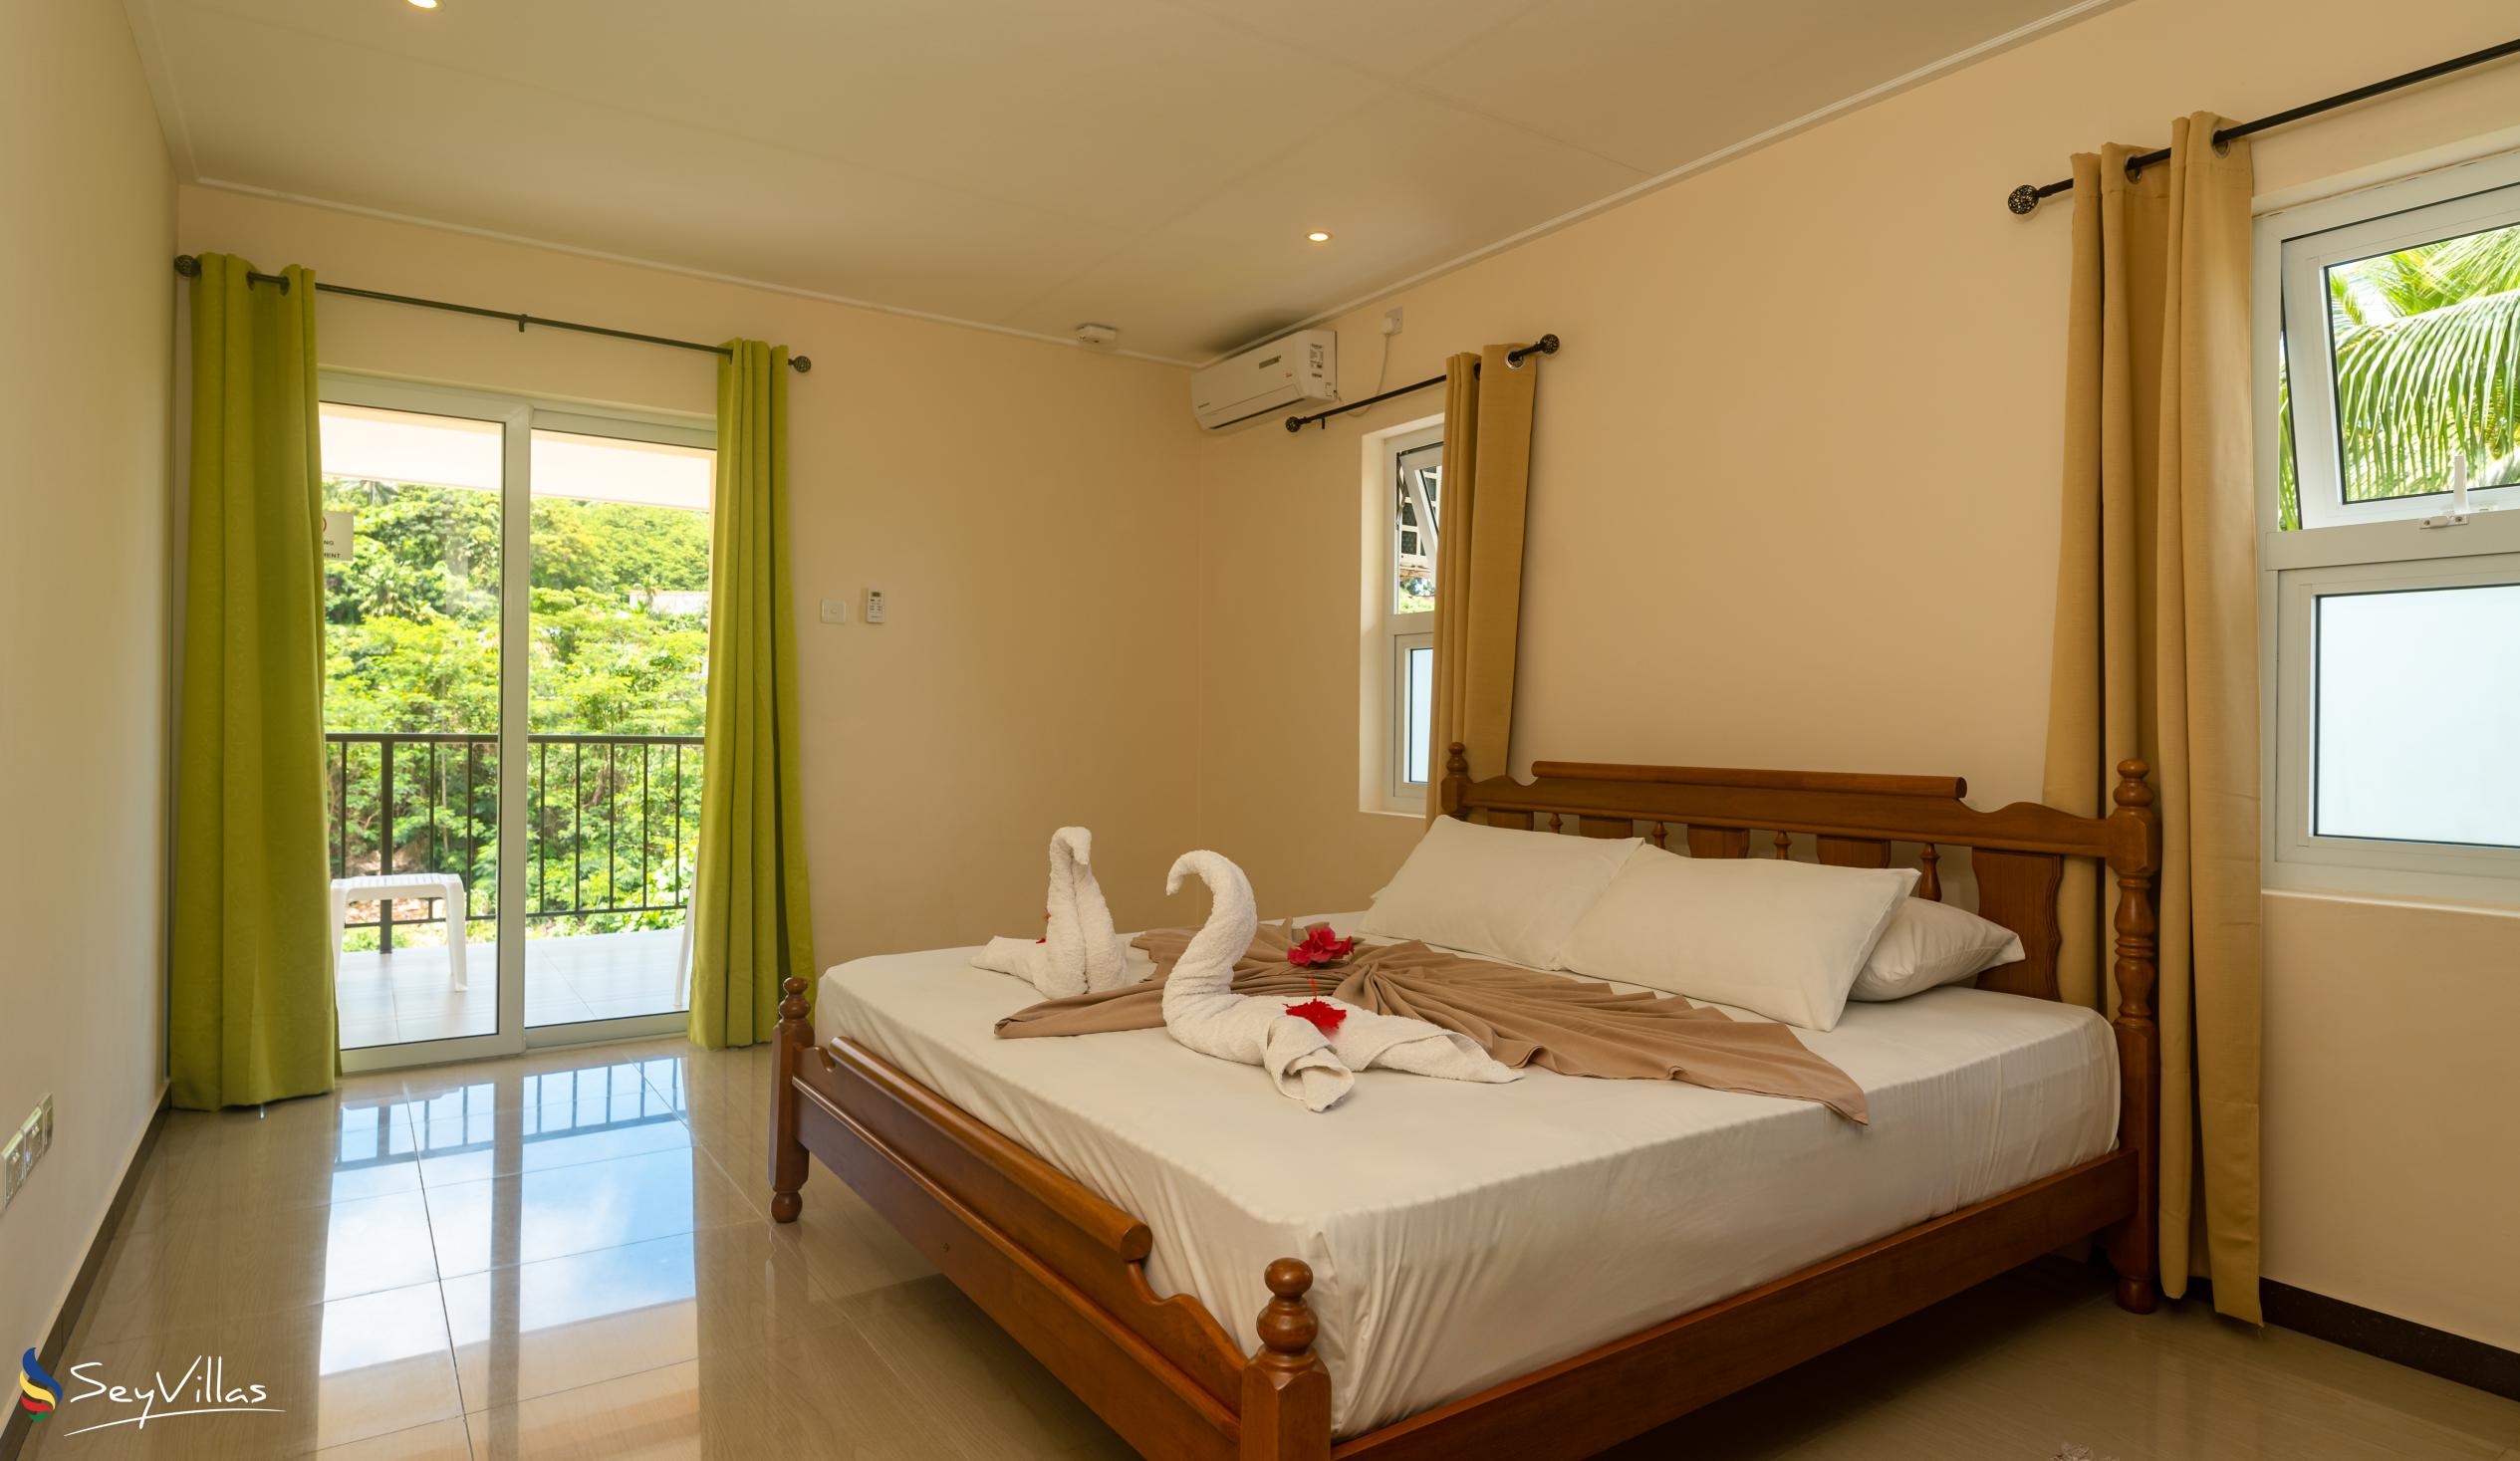 Foto 33: JAIDSS Holiday Apartments - Appartamento con 2 camere - Mahé (Seychelles)